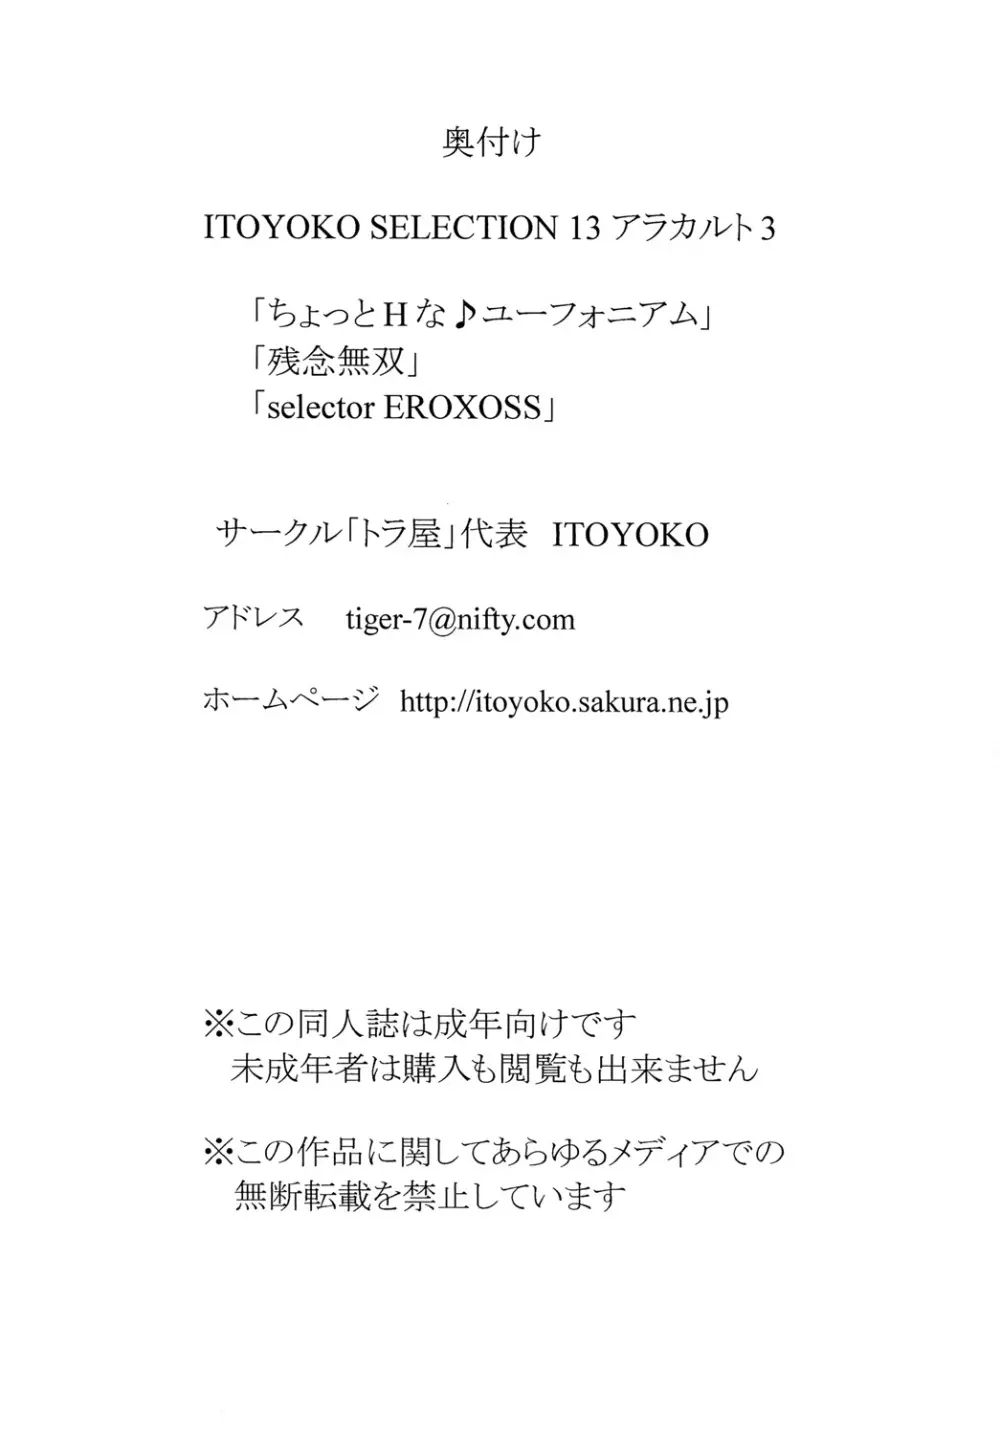 ITOYOKO SELECTION13 アラカルト3 - page91